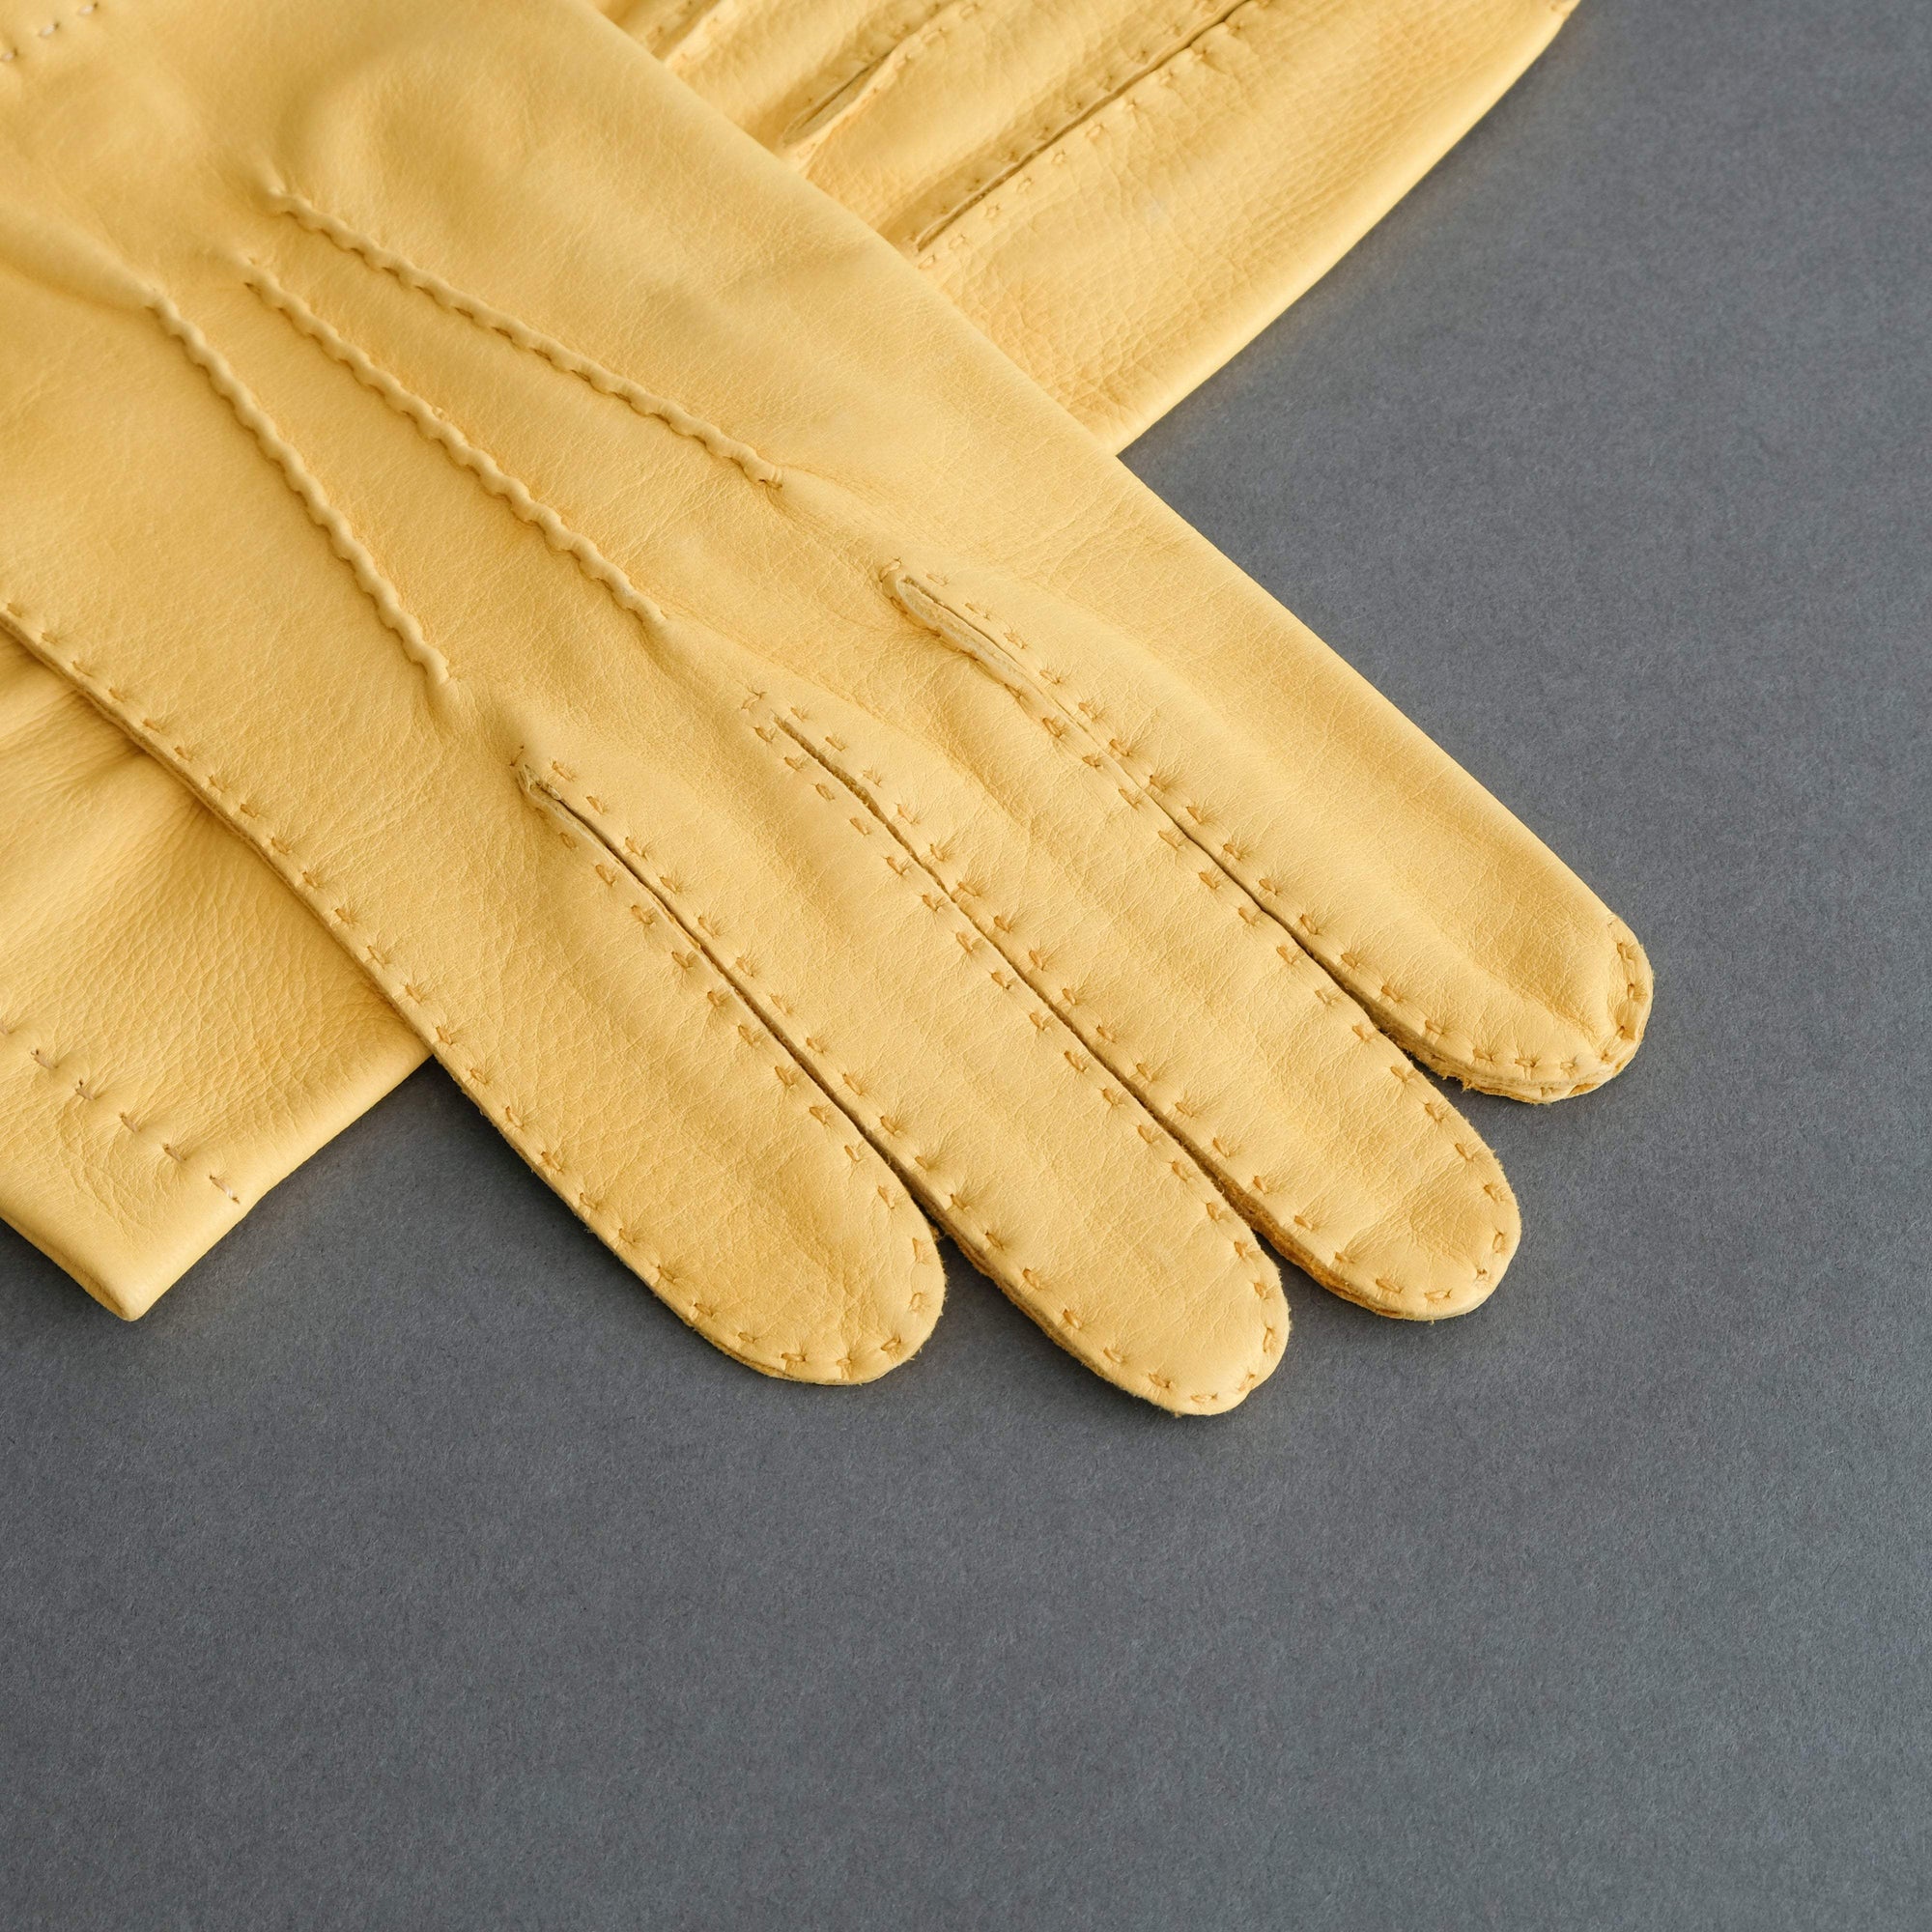 Gentlemen's Unlined Hand Sewn Gloves from Yellow Deerskin - TR Handschuhe Wien - Thomas Riemer Handmade Gloves